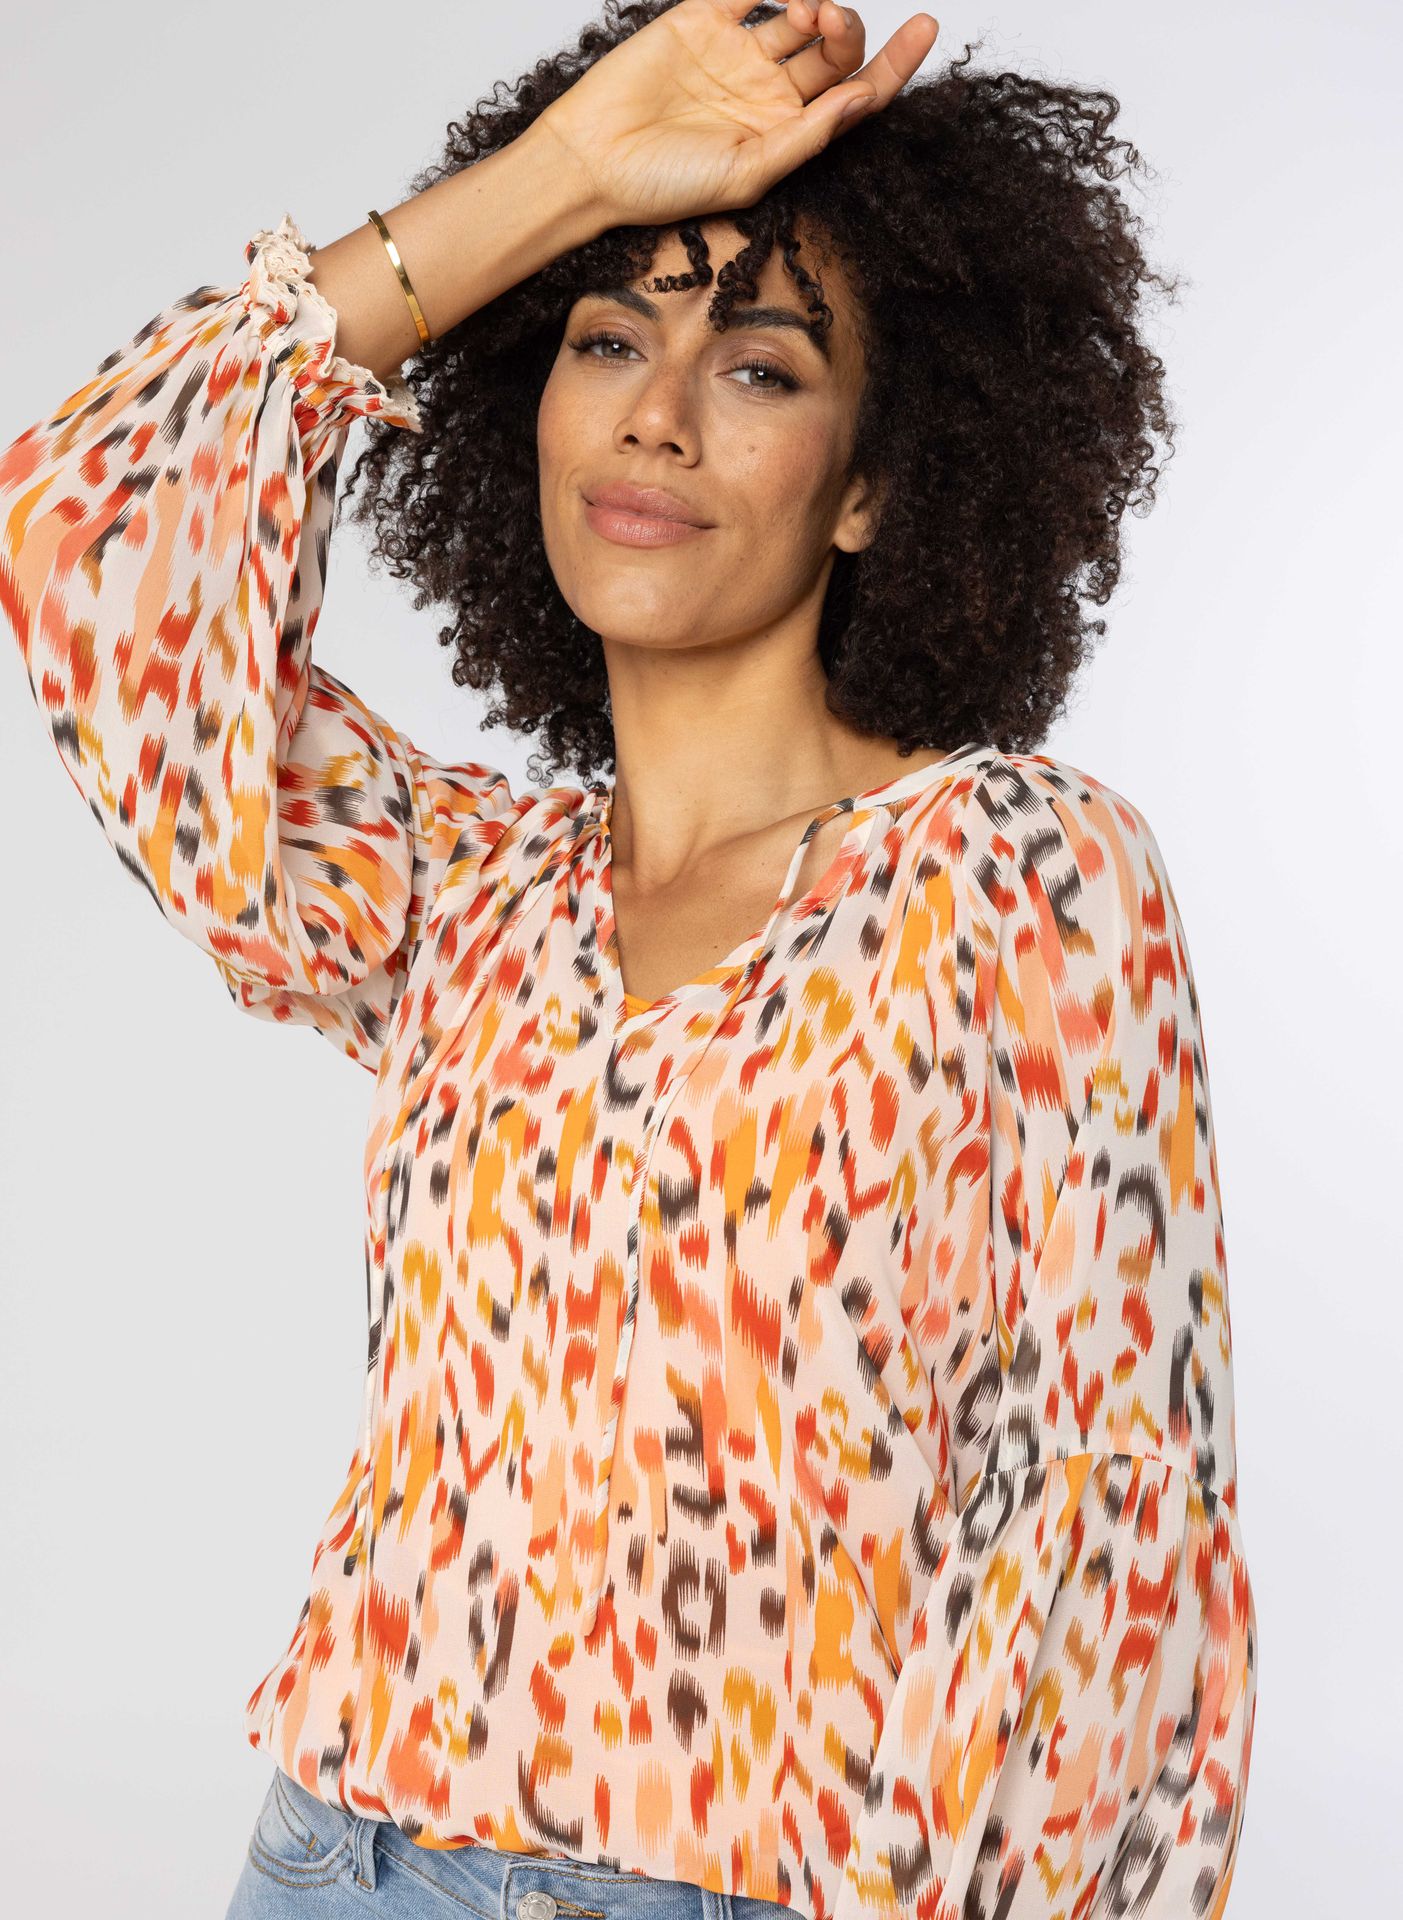 Norah Meerkleurige blouse met koordjes multicolor 213697-002